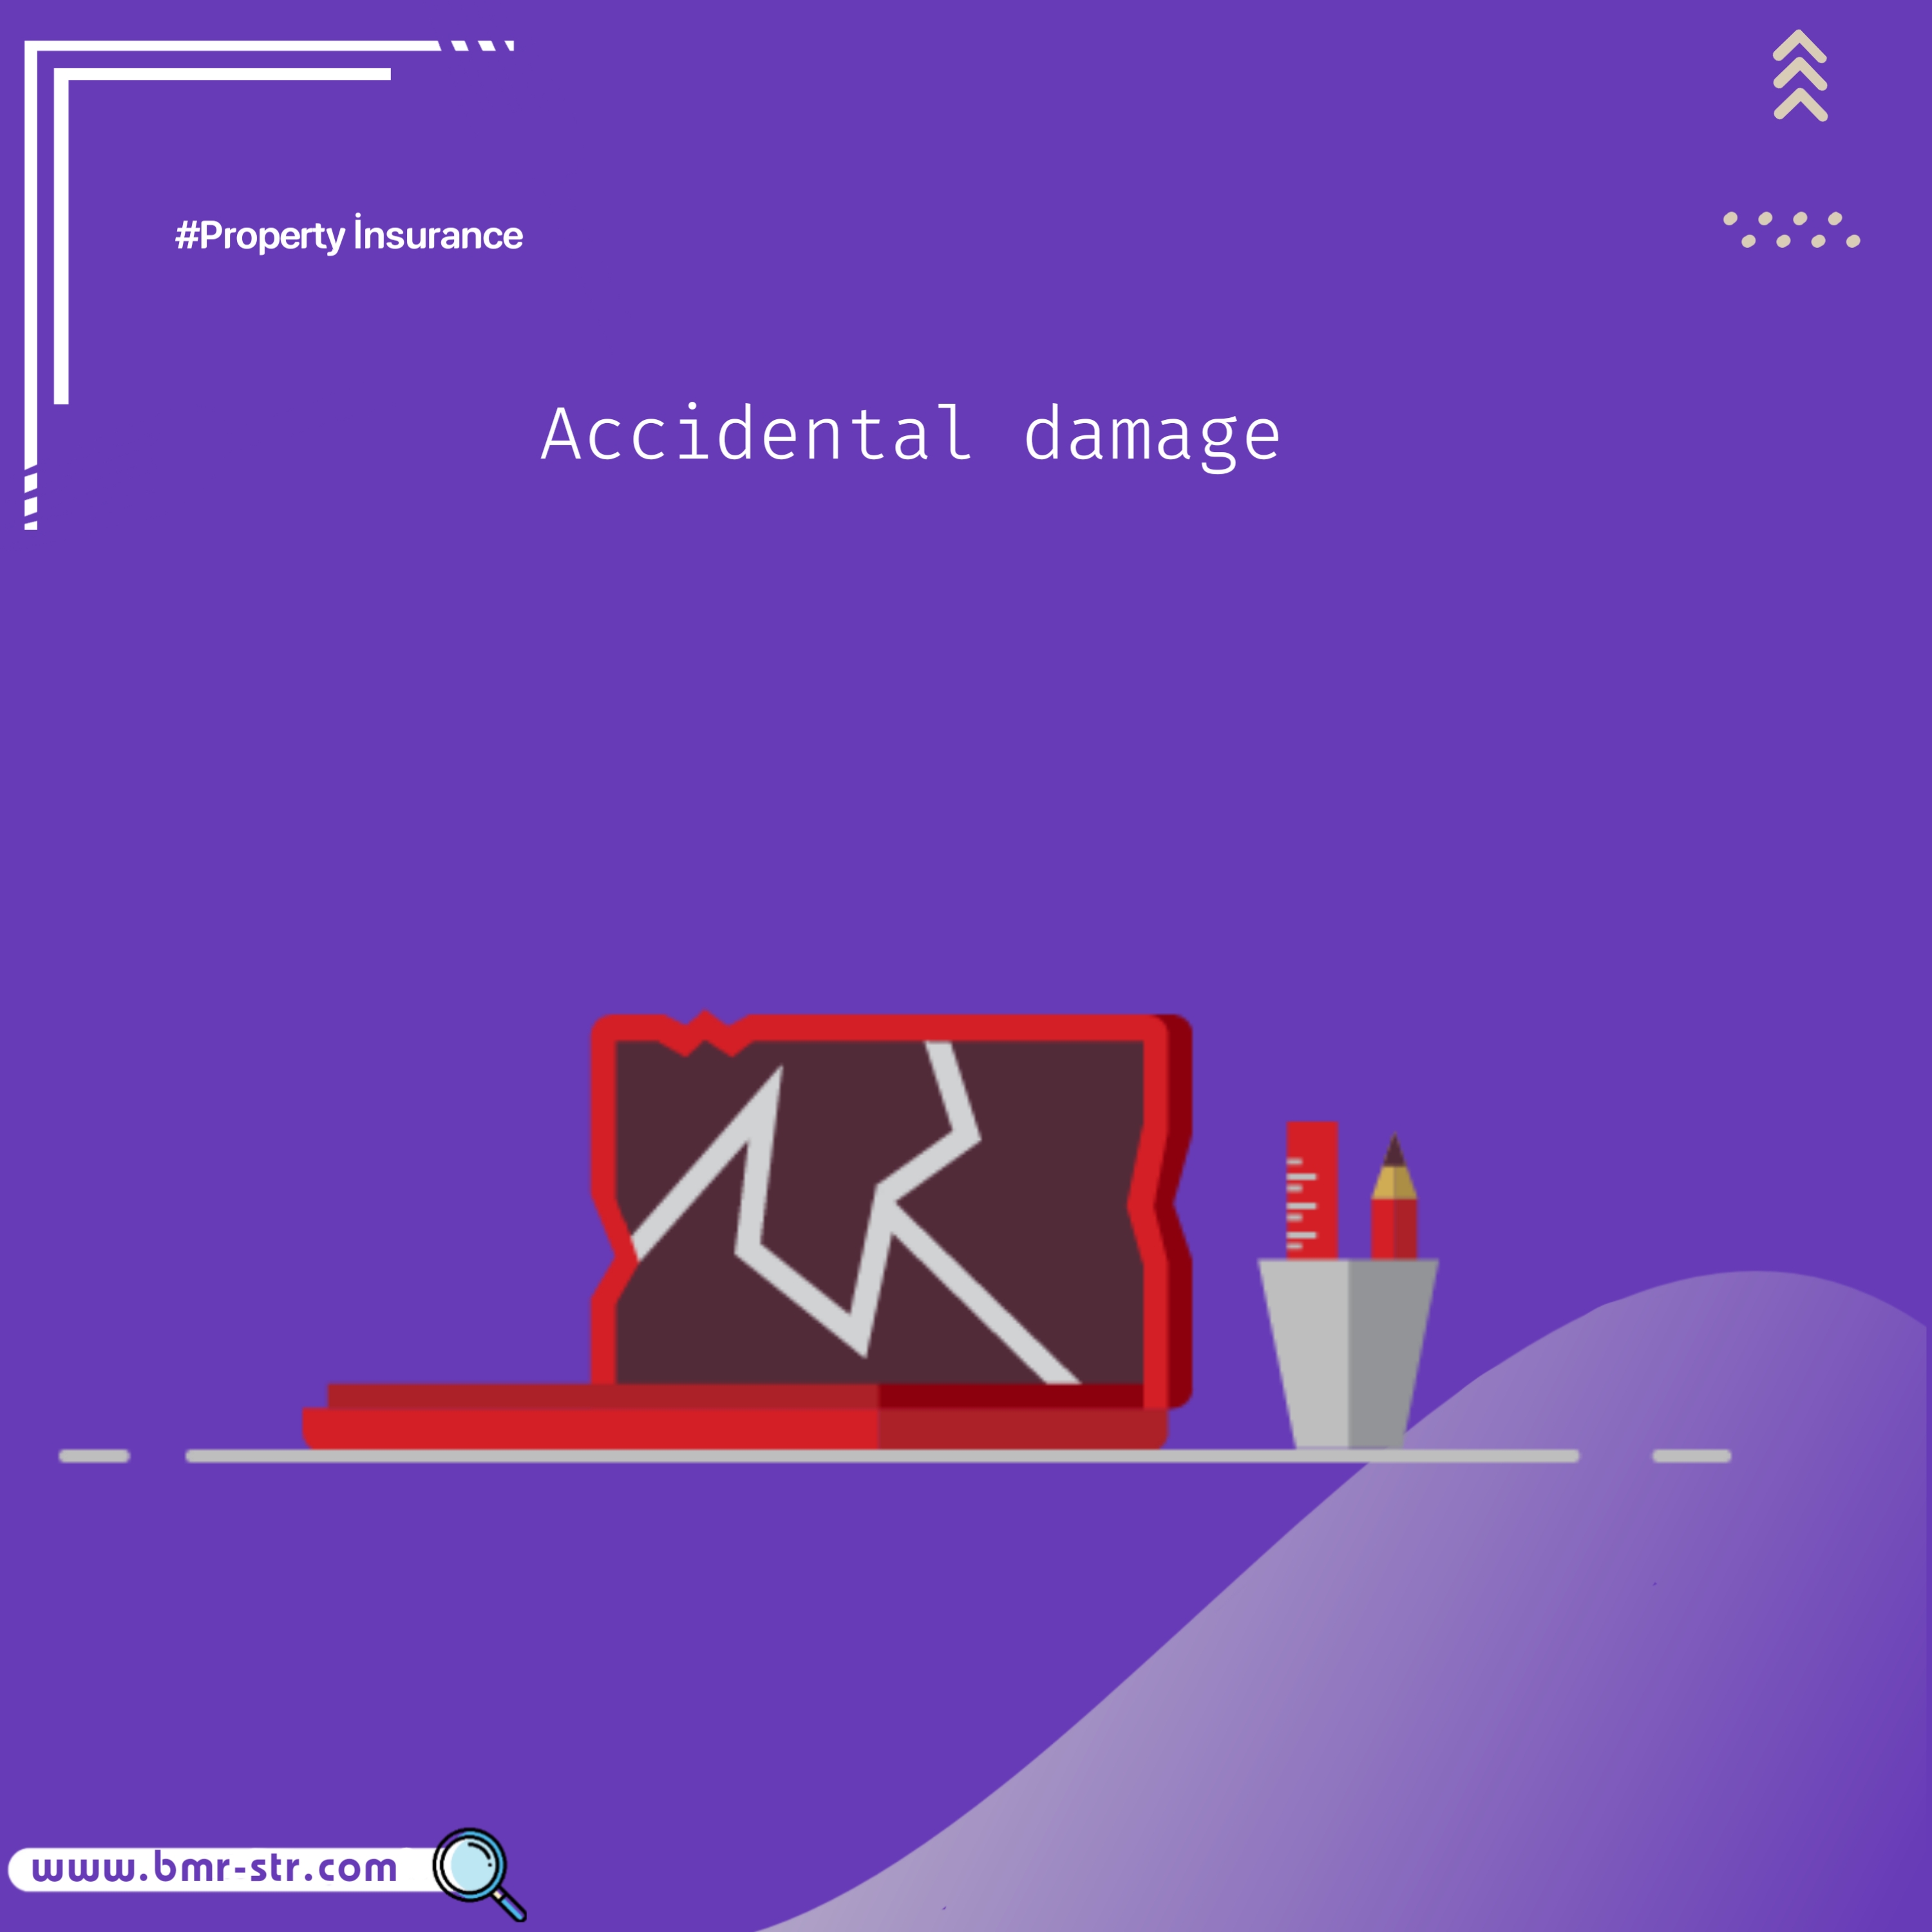 Accidental damage